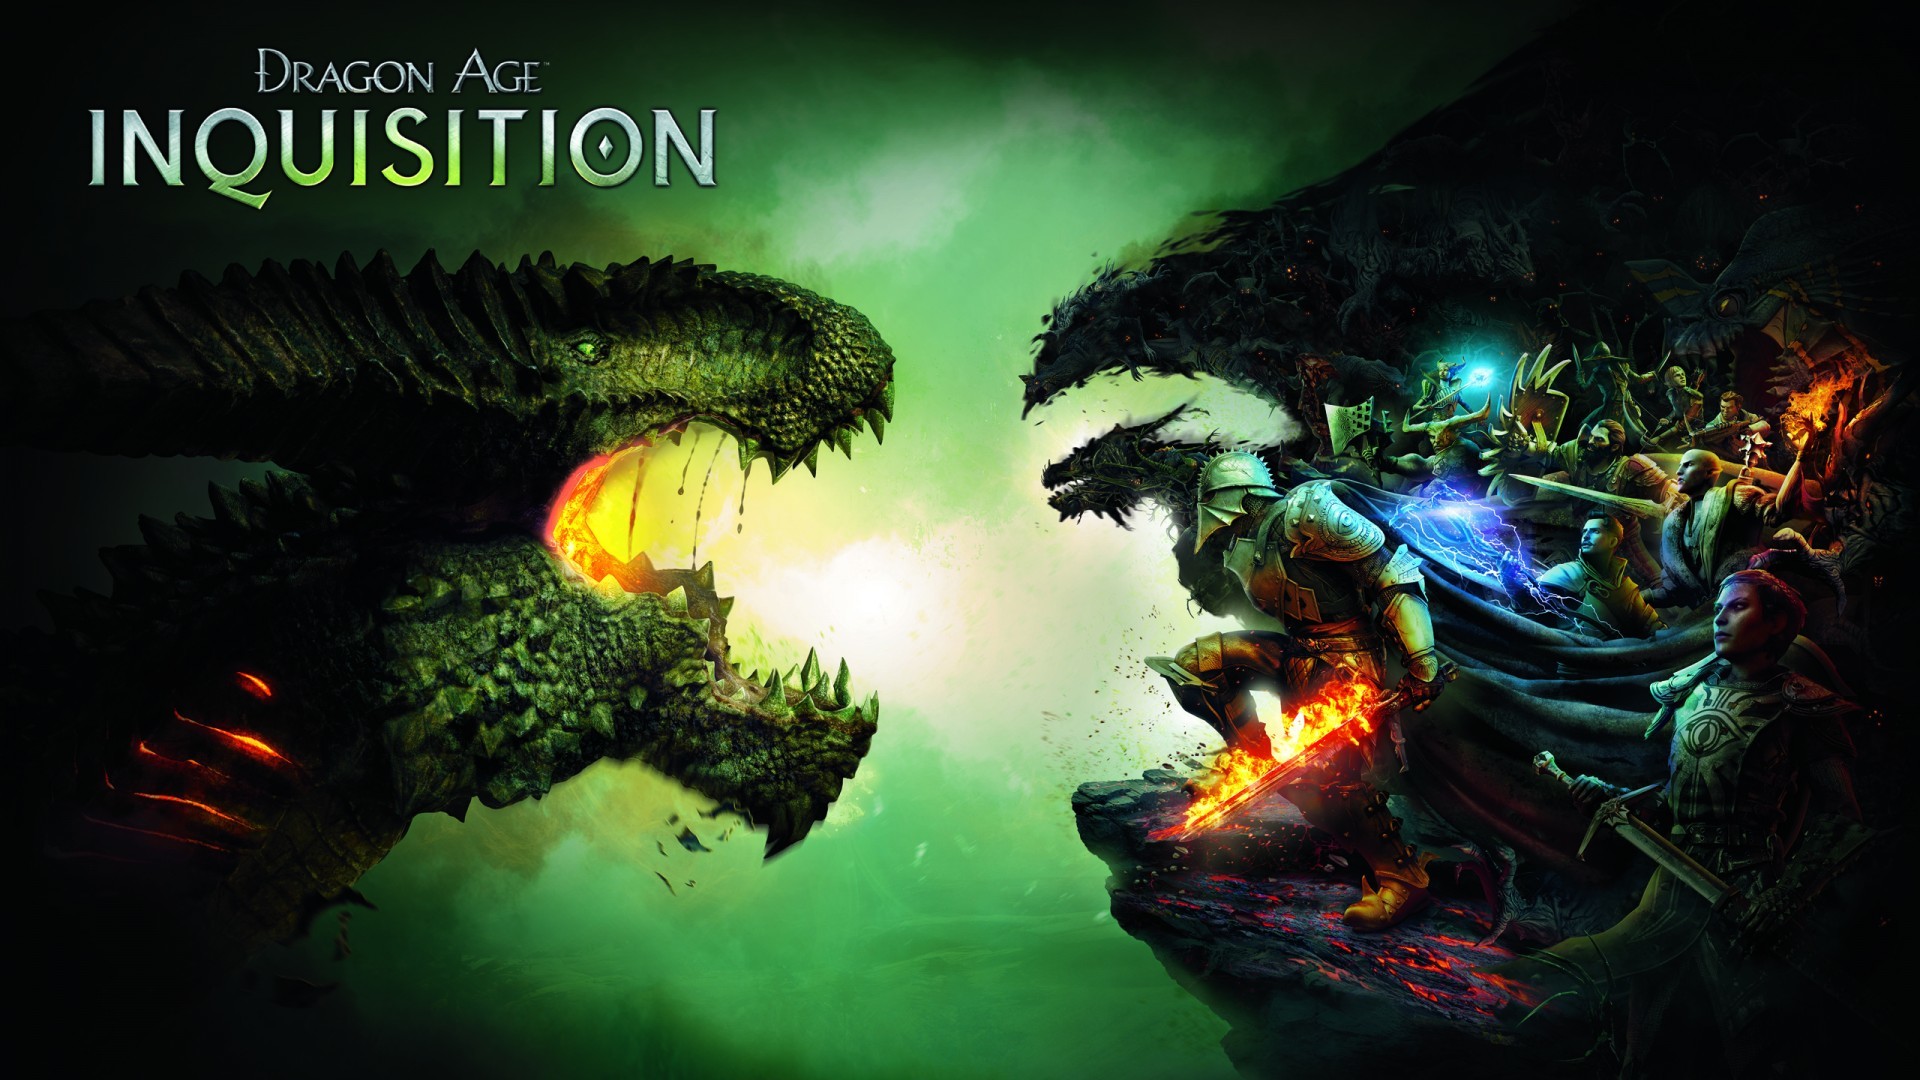 1920x1080 ... x 1080 2560 x 1440 Original. Description: Download Dragon Age  Inquisition Game Games wallpaper ...